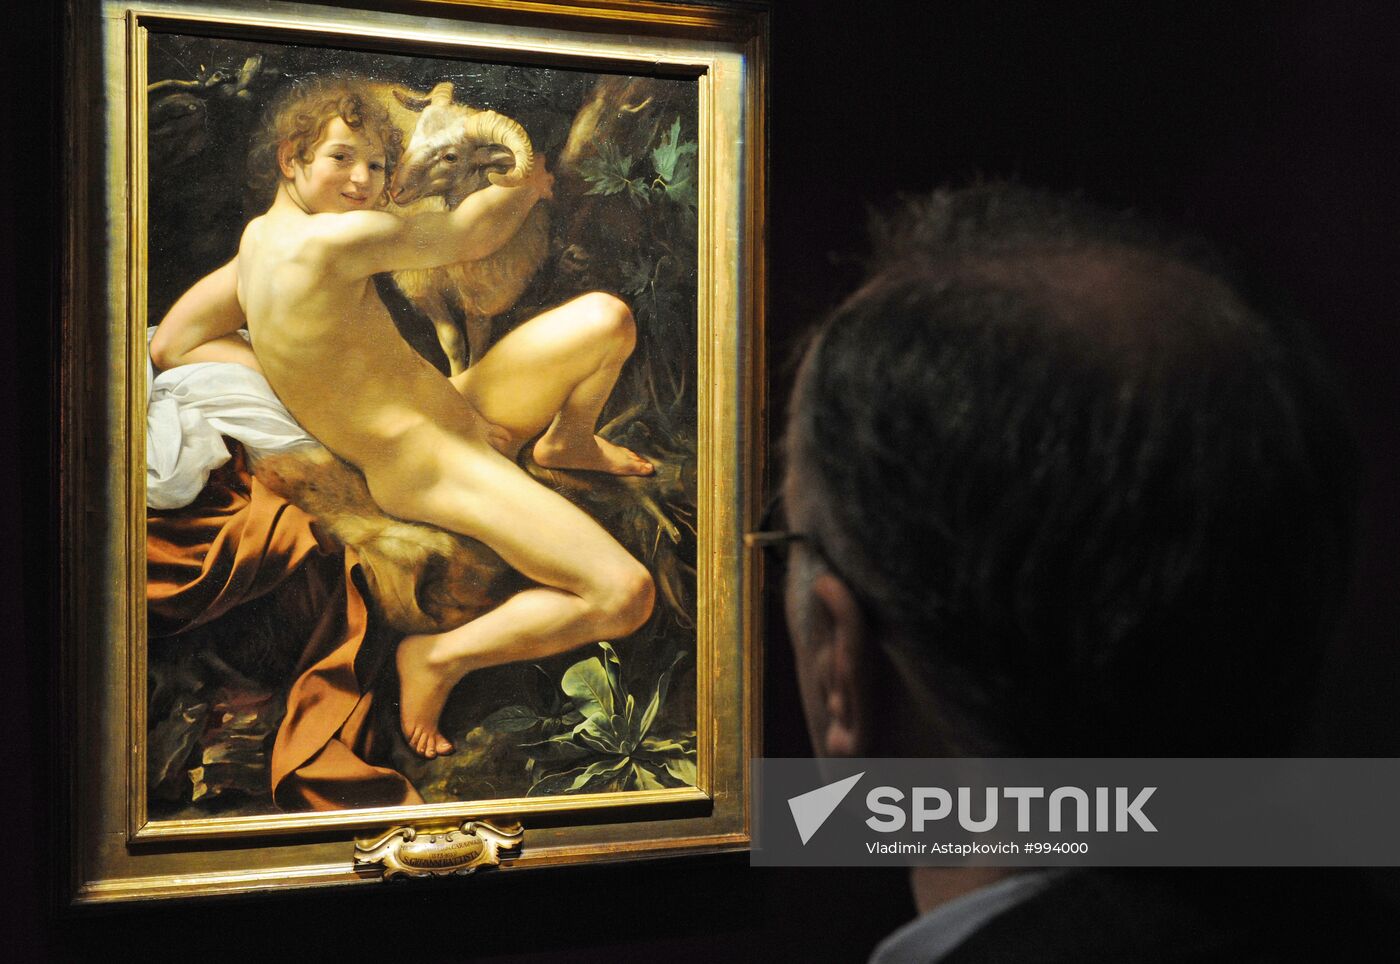 Caravaggio exhibition opens at Pushkin Museum of Fine Arts